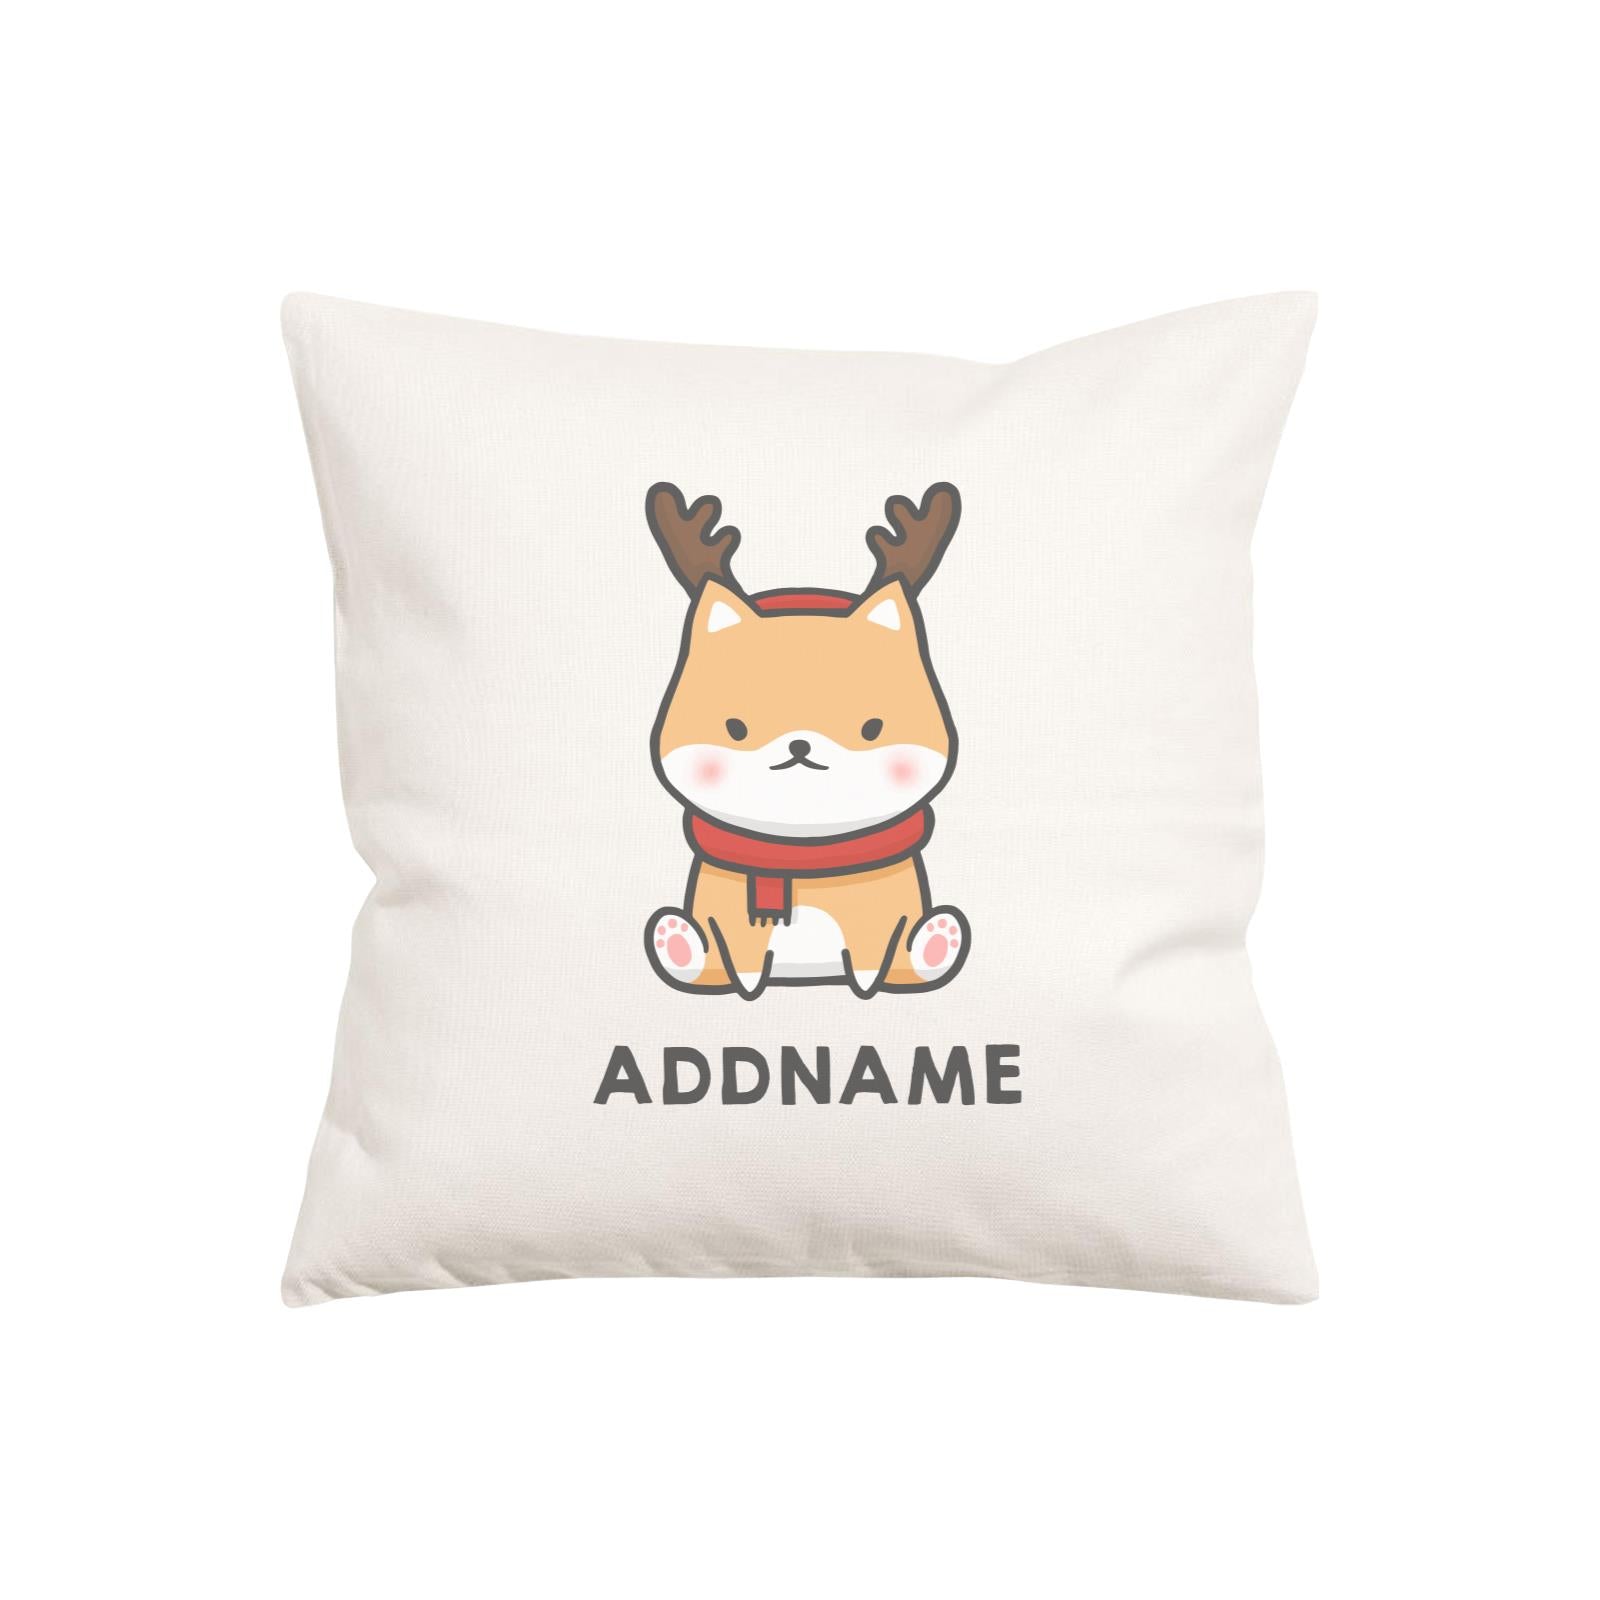 Xmas Cute Shiba Inu Sitting Addname Pillow Cushion